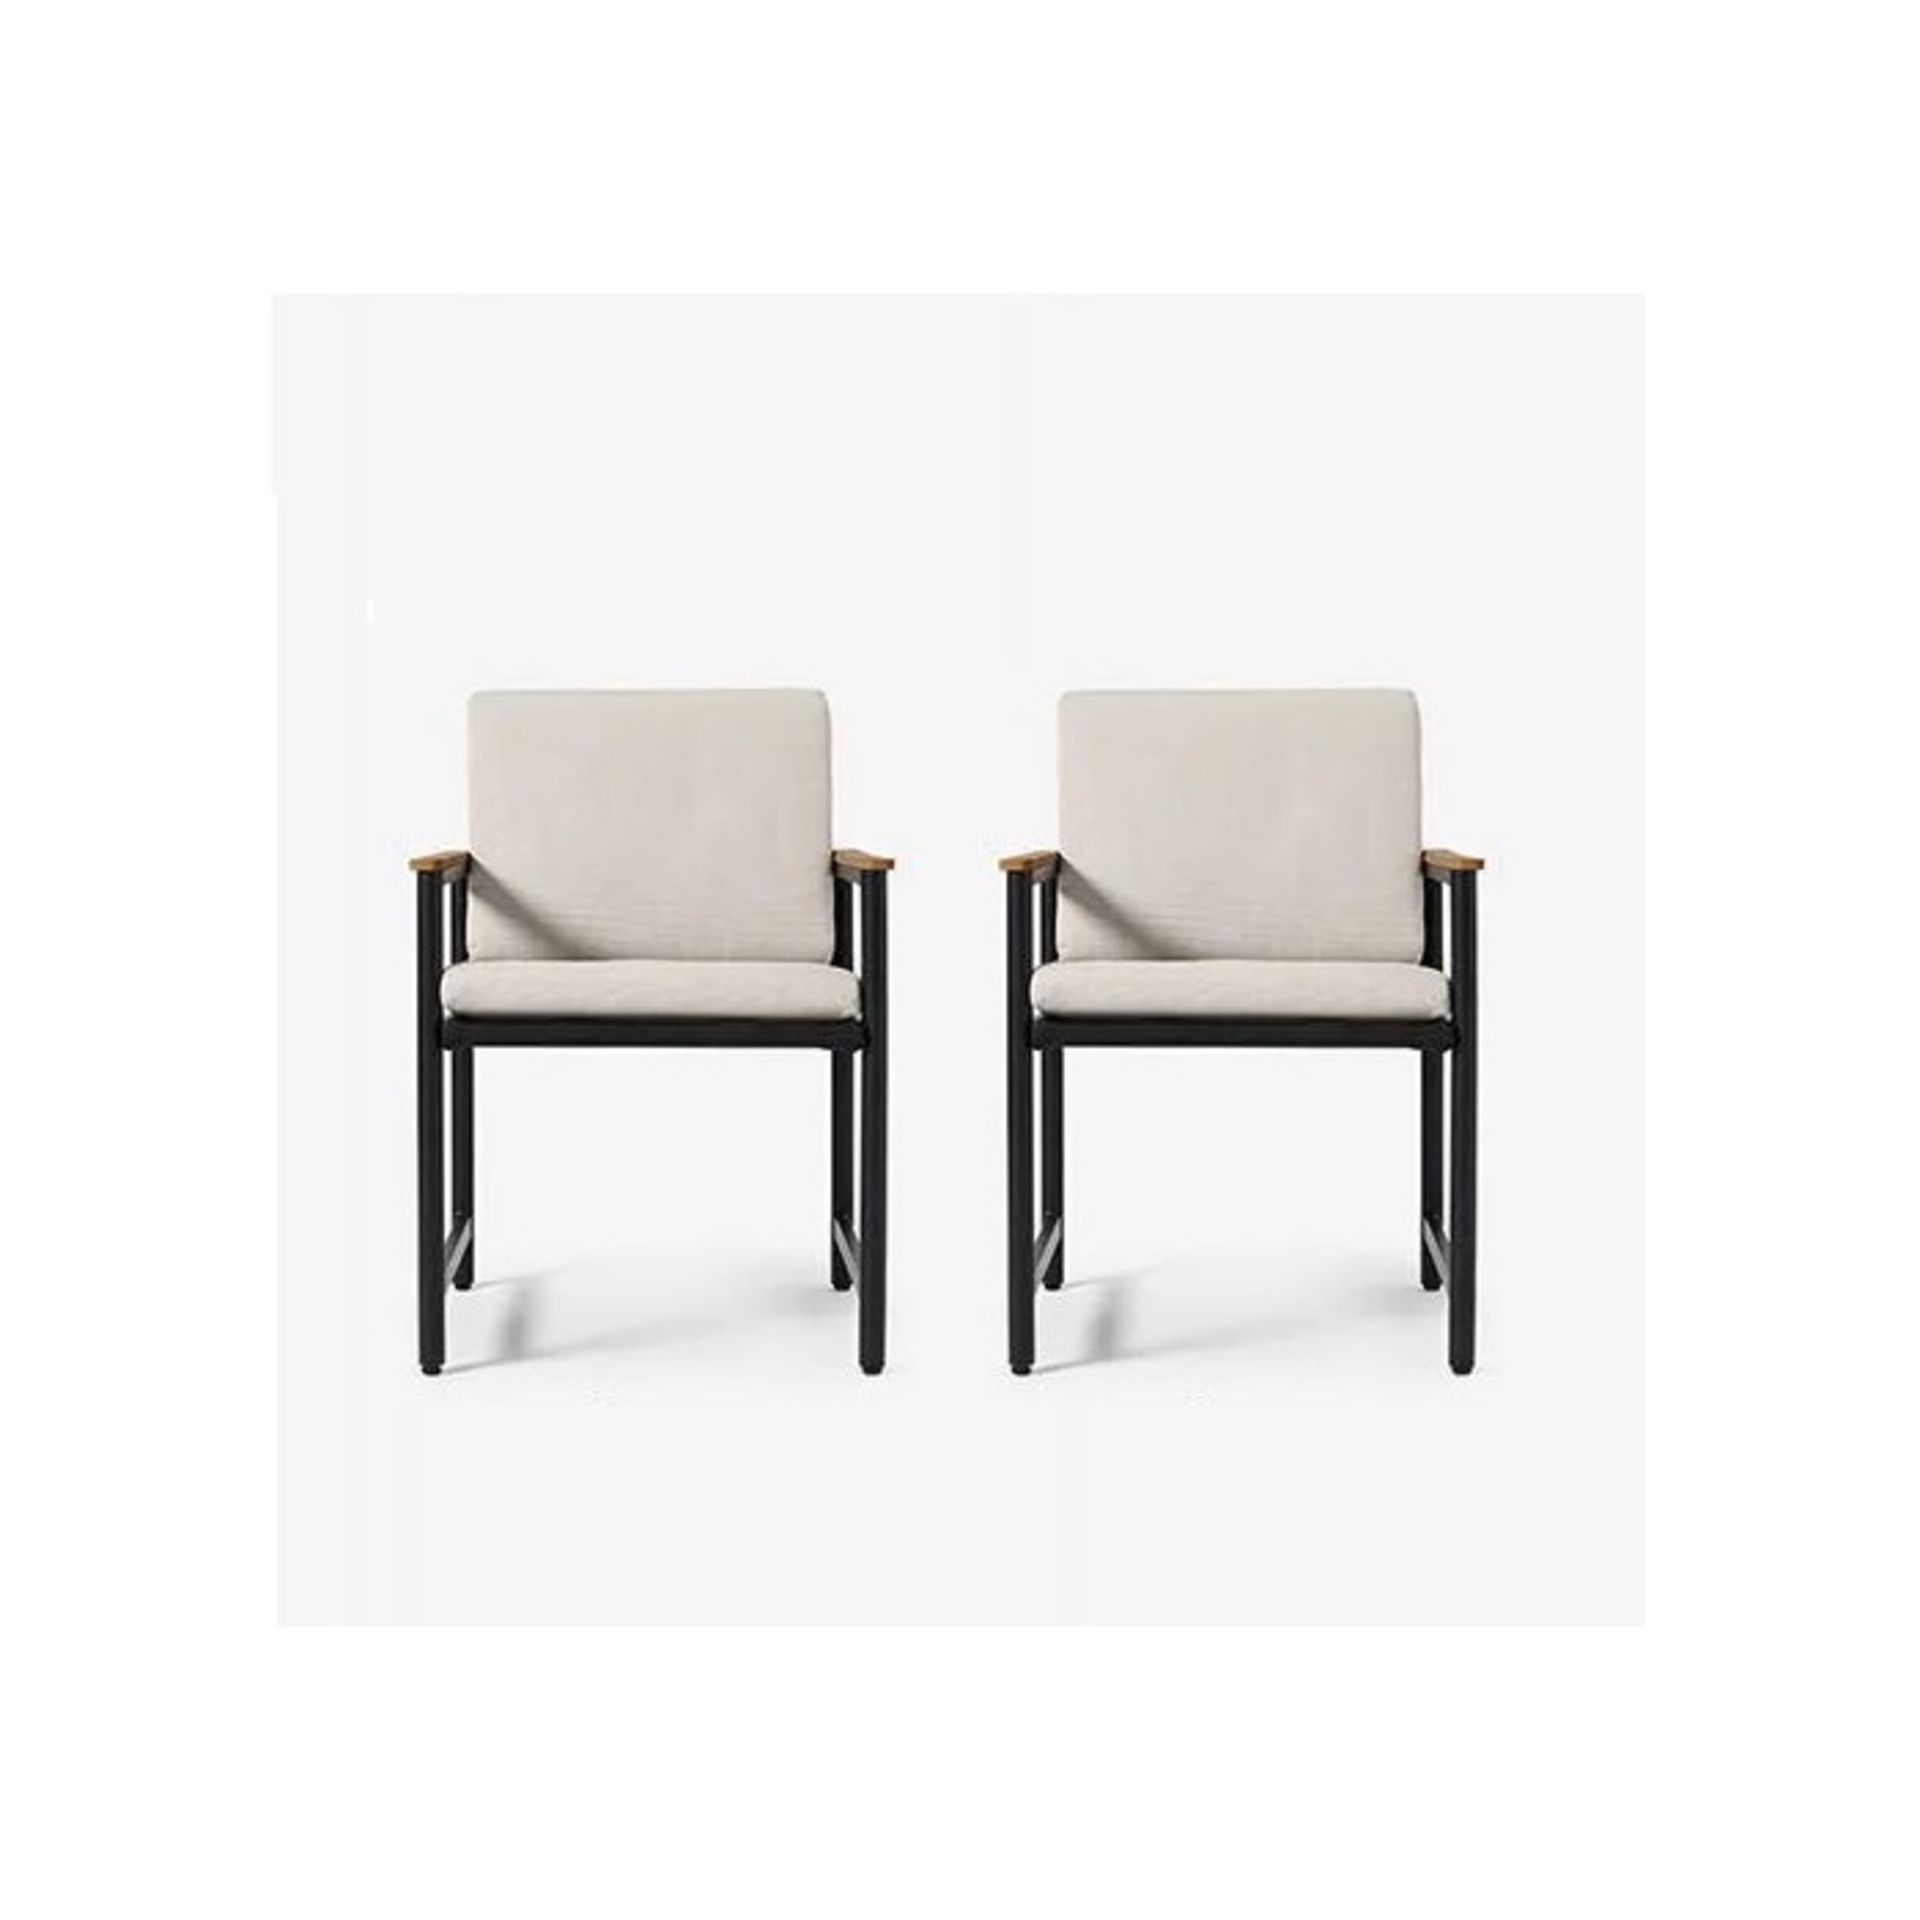 BRAND NEW Made.com -Sassari Pair Of Outdoor Chairs. RRP £109.00 EACH.